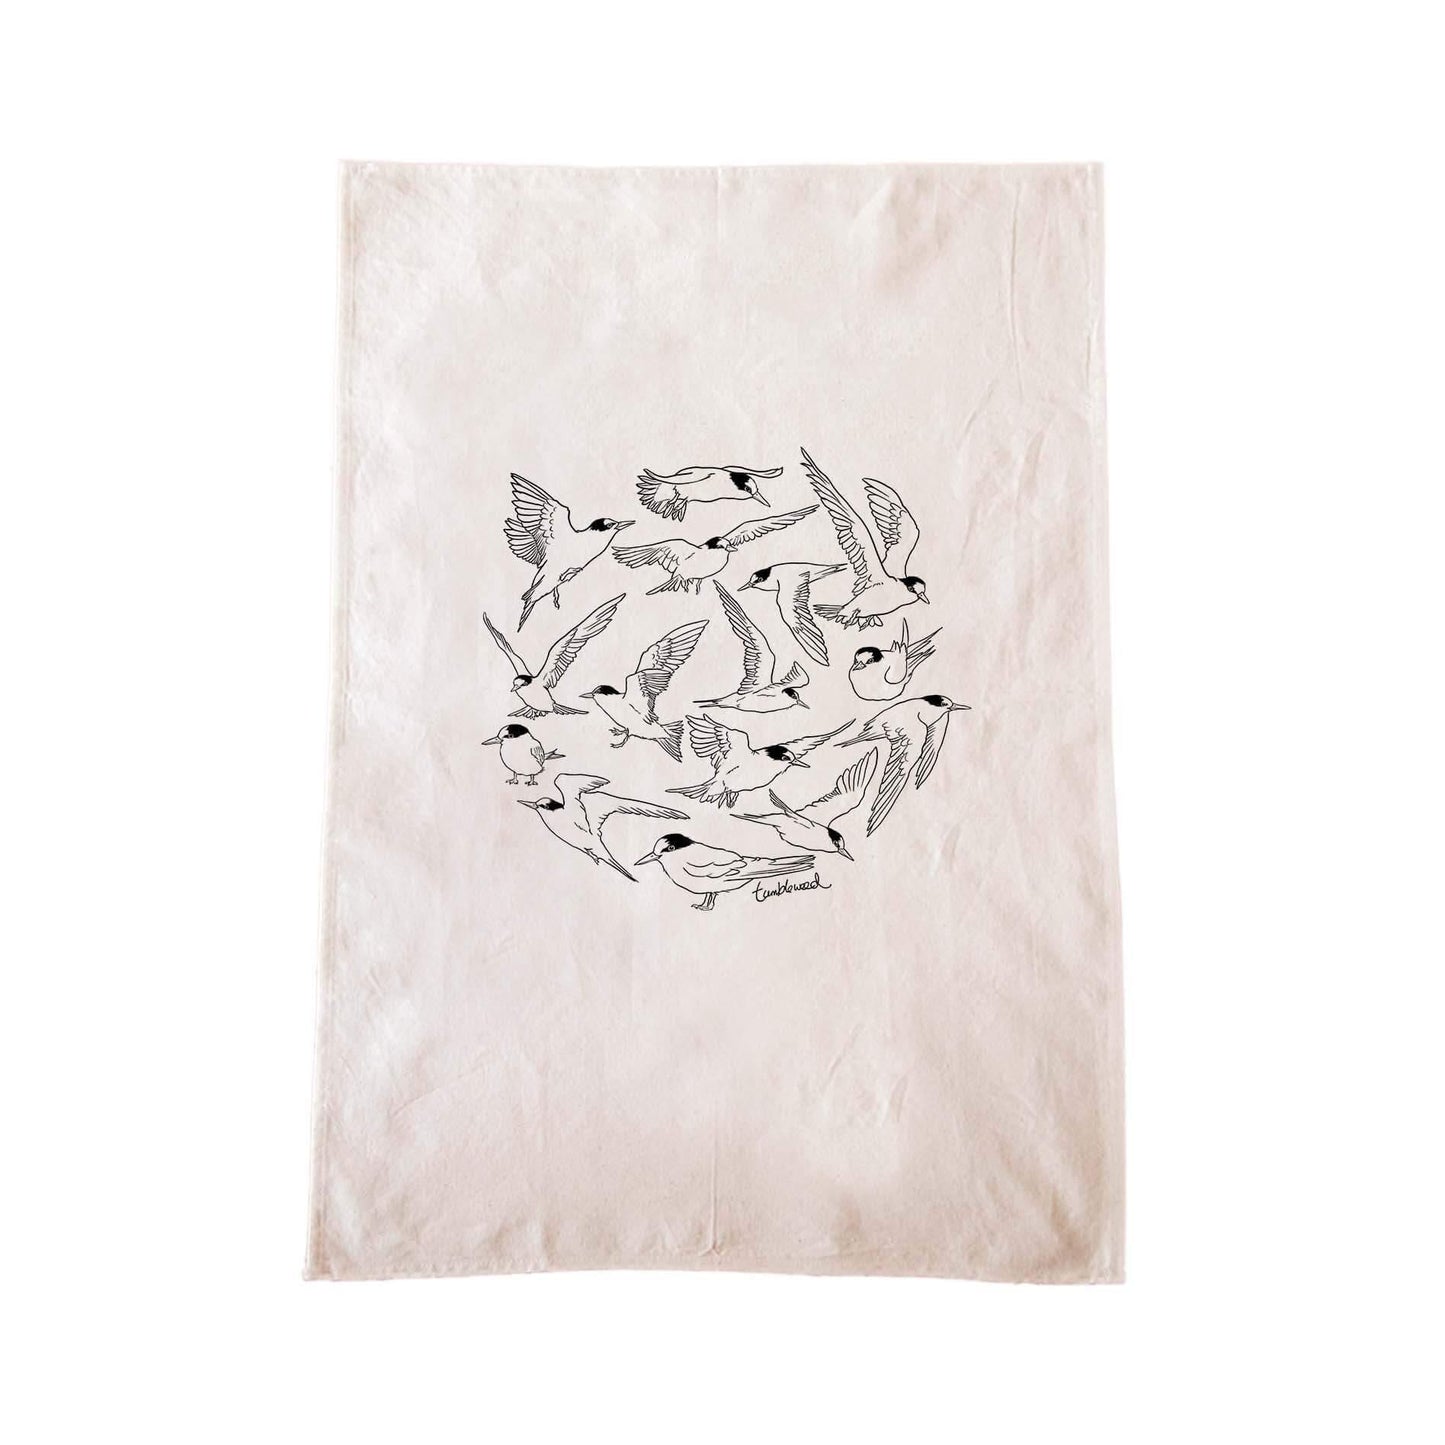 Off-white cotton tea towel with a screen printed Black Stilt/Kakī  design.